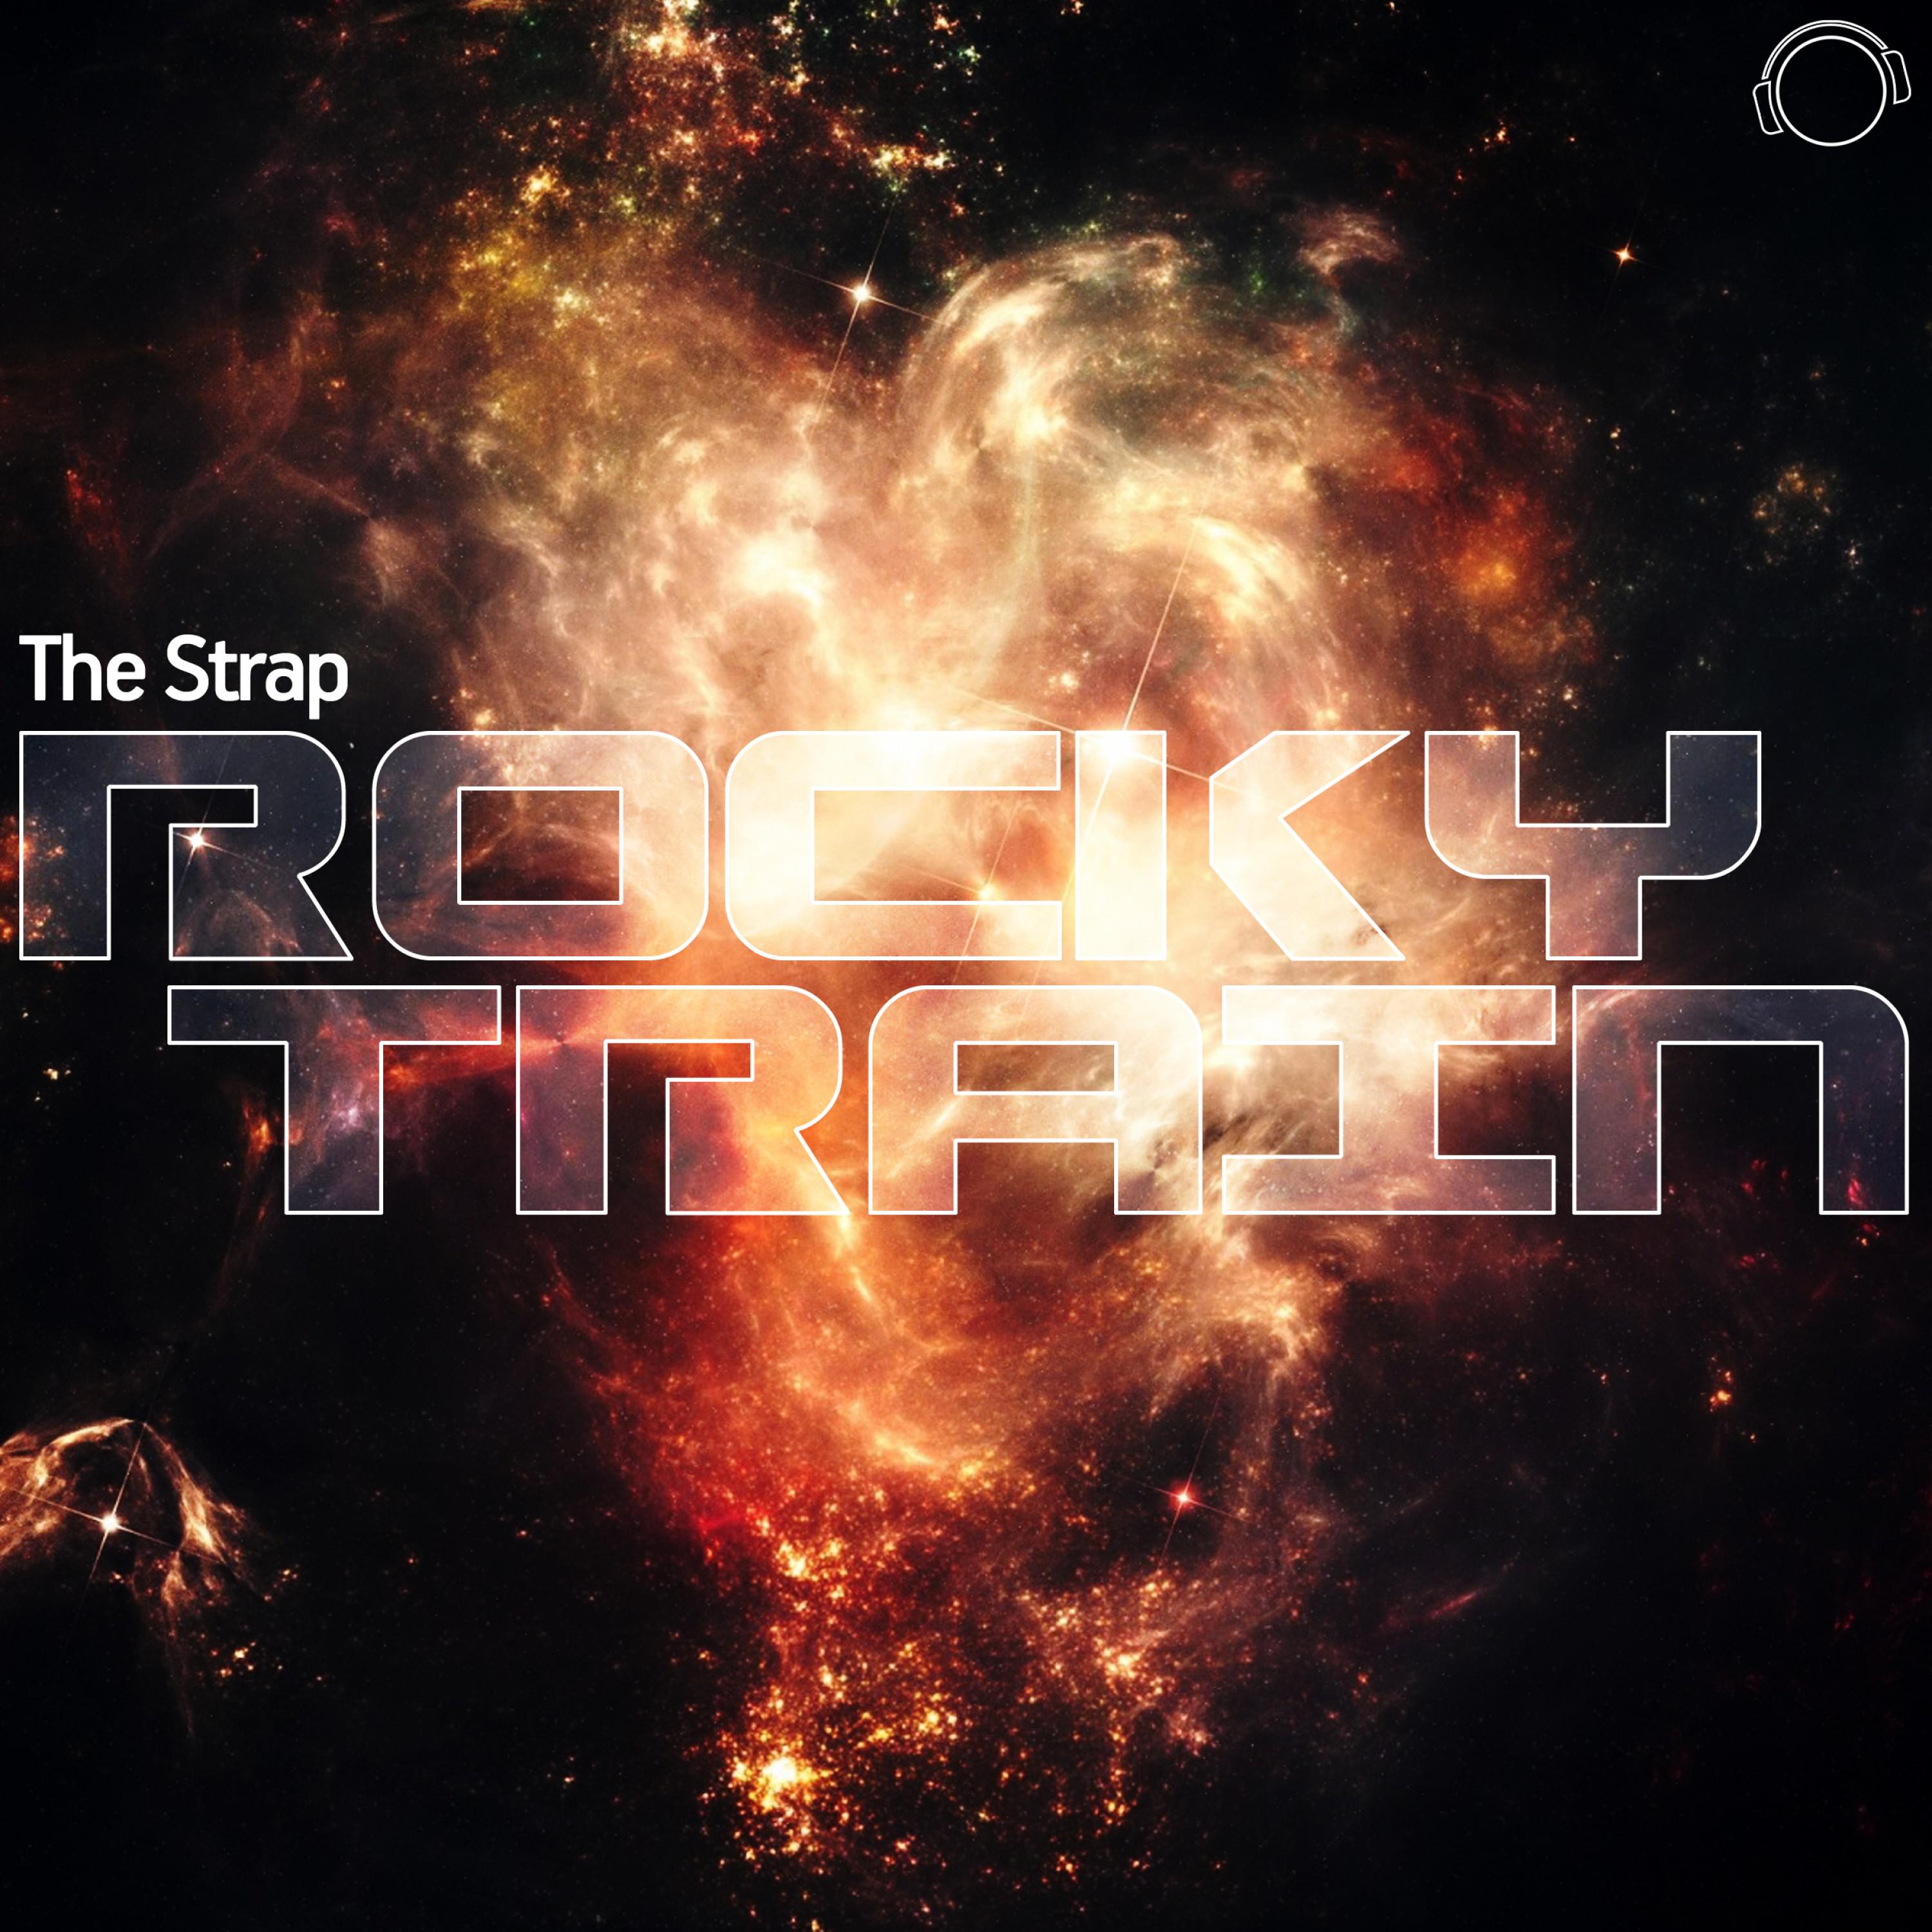 The Strap - Rockytrain (Radio Edit)